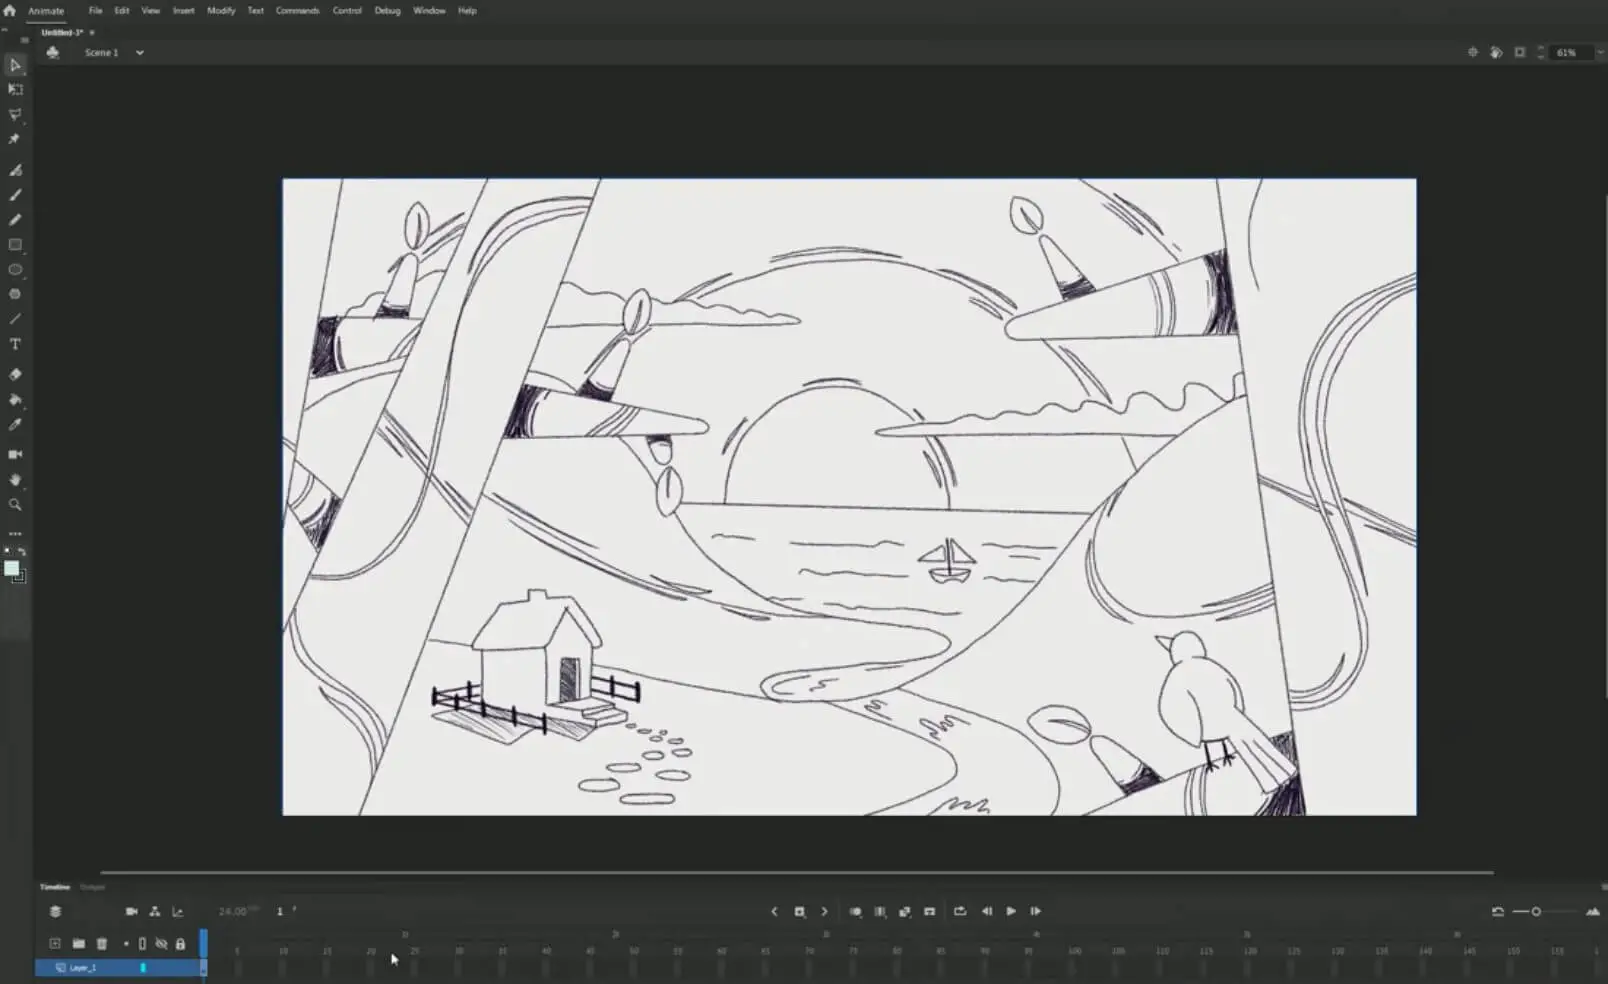  Adobe Animate 的介面